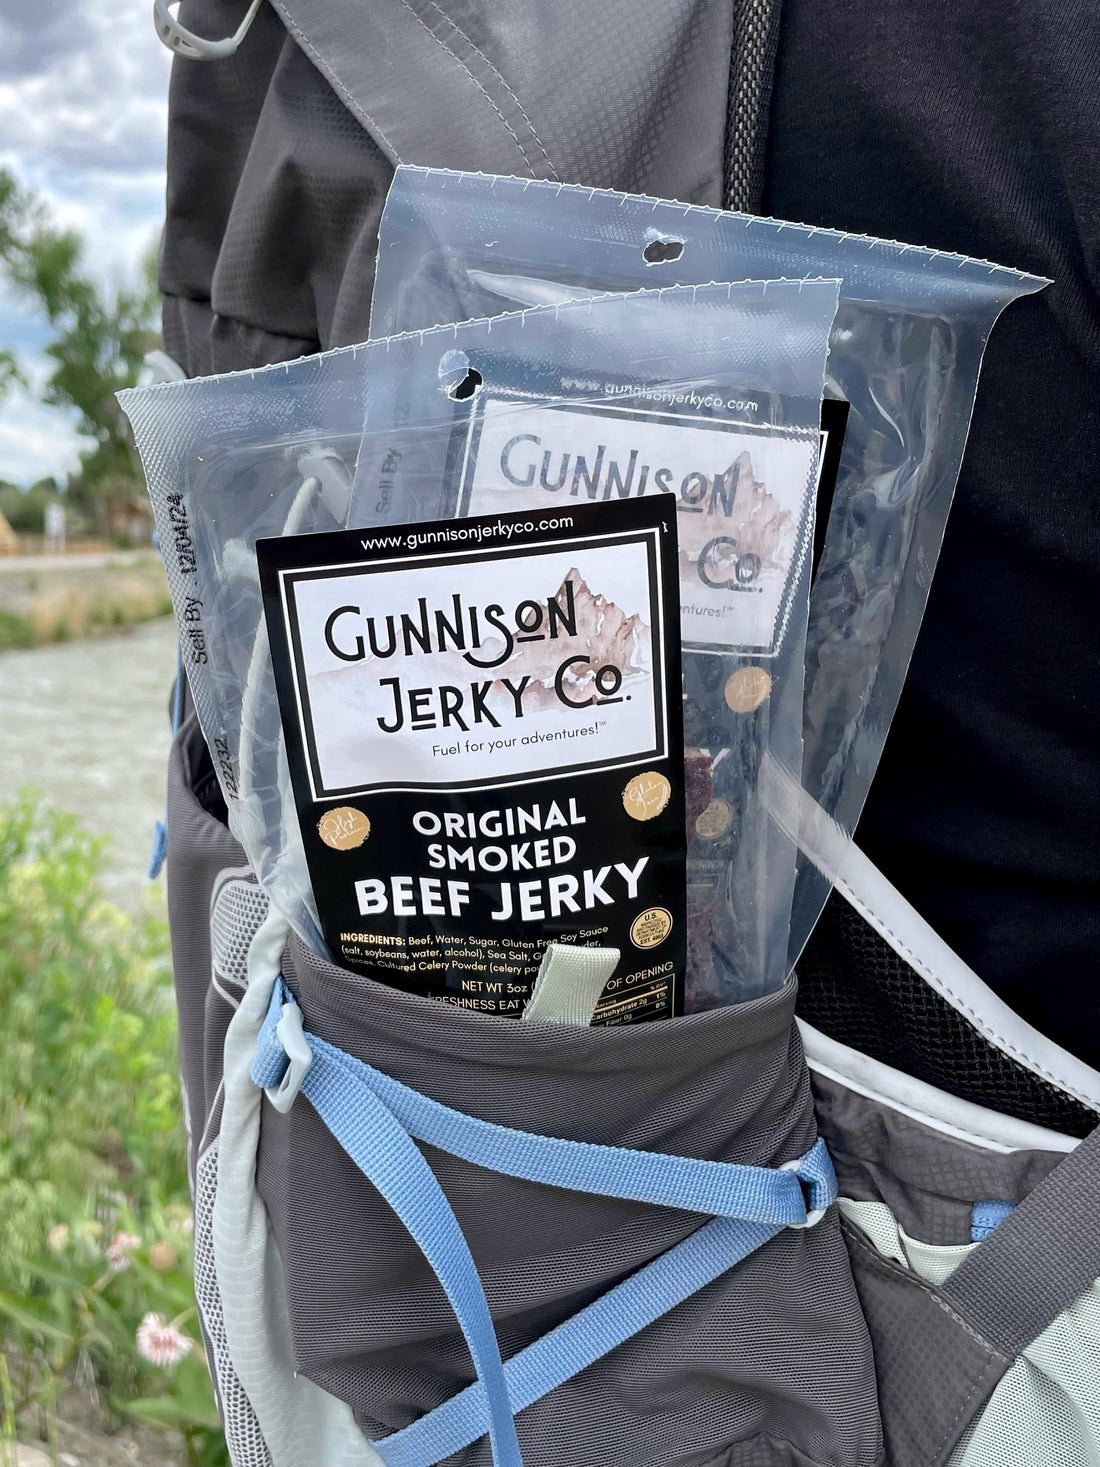 Gunnison Jerky Co. Original Smoked Beef Jerky in Backpack